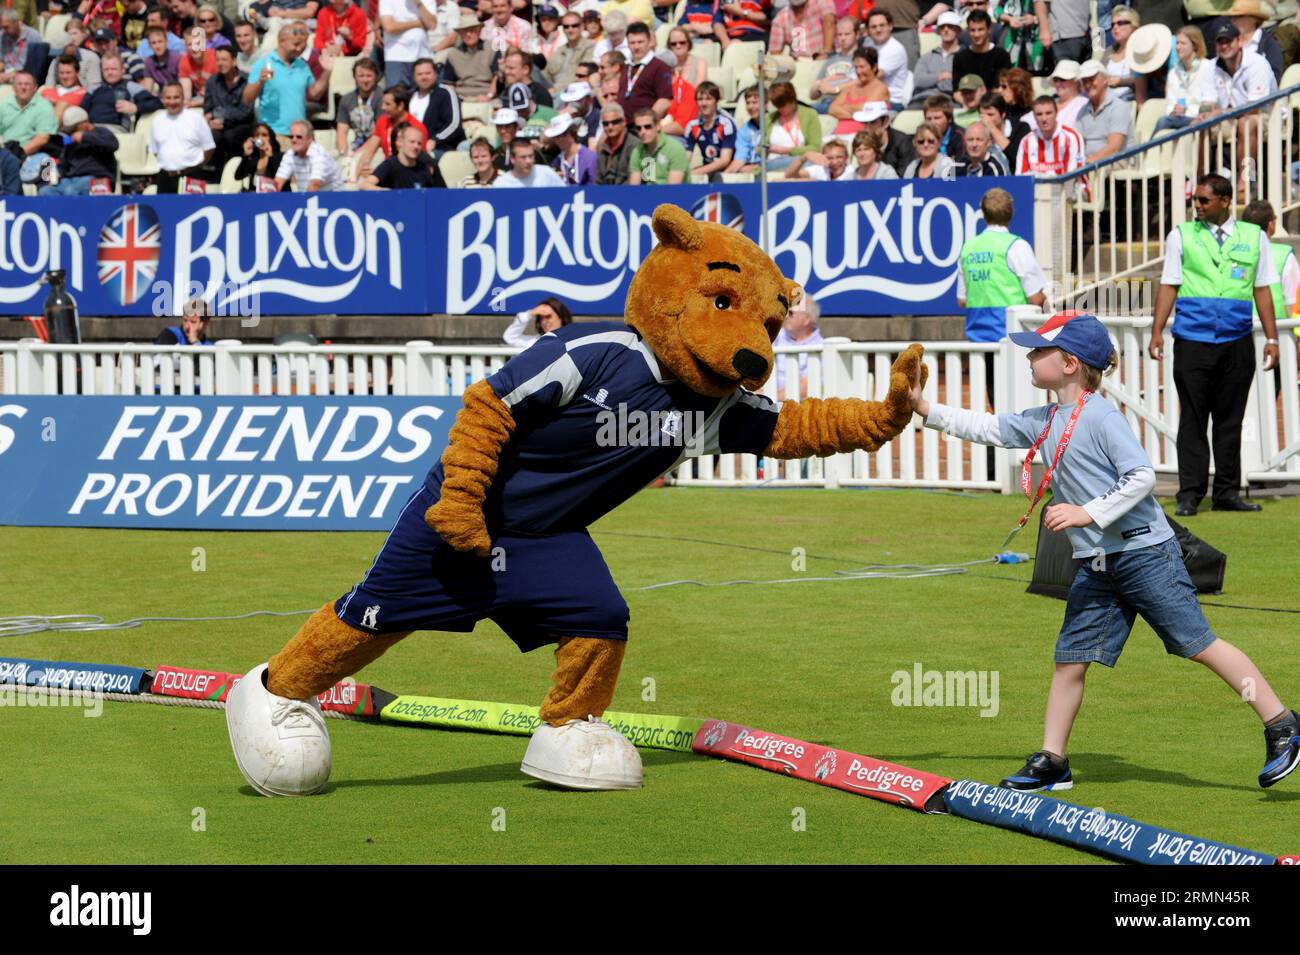 Birmingham Bears mascota de cricket Foto de stock